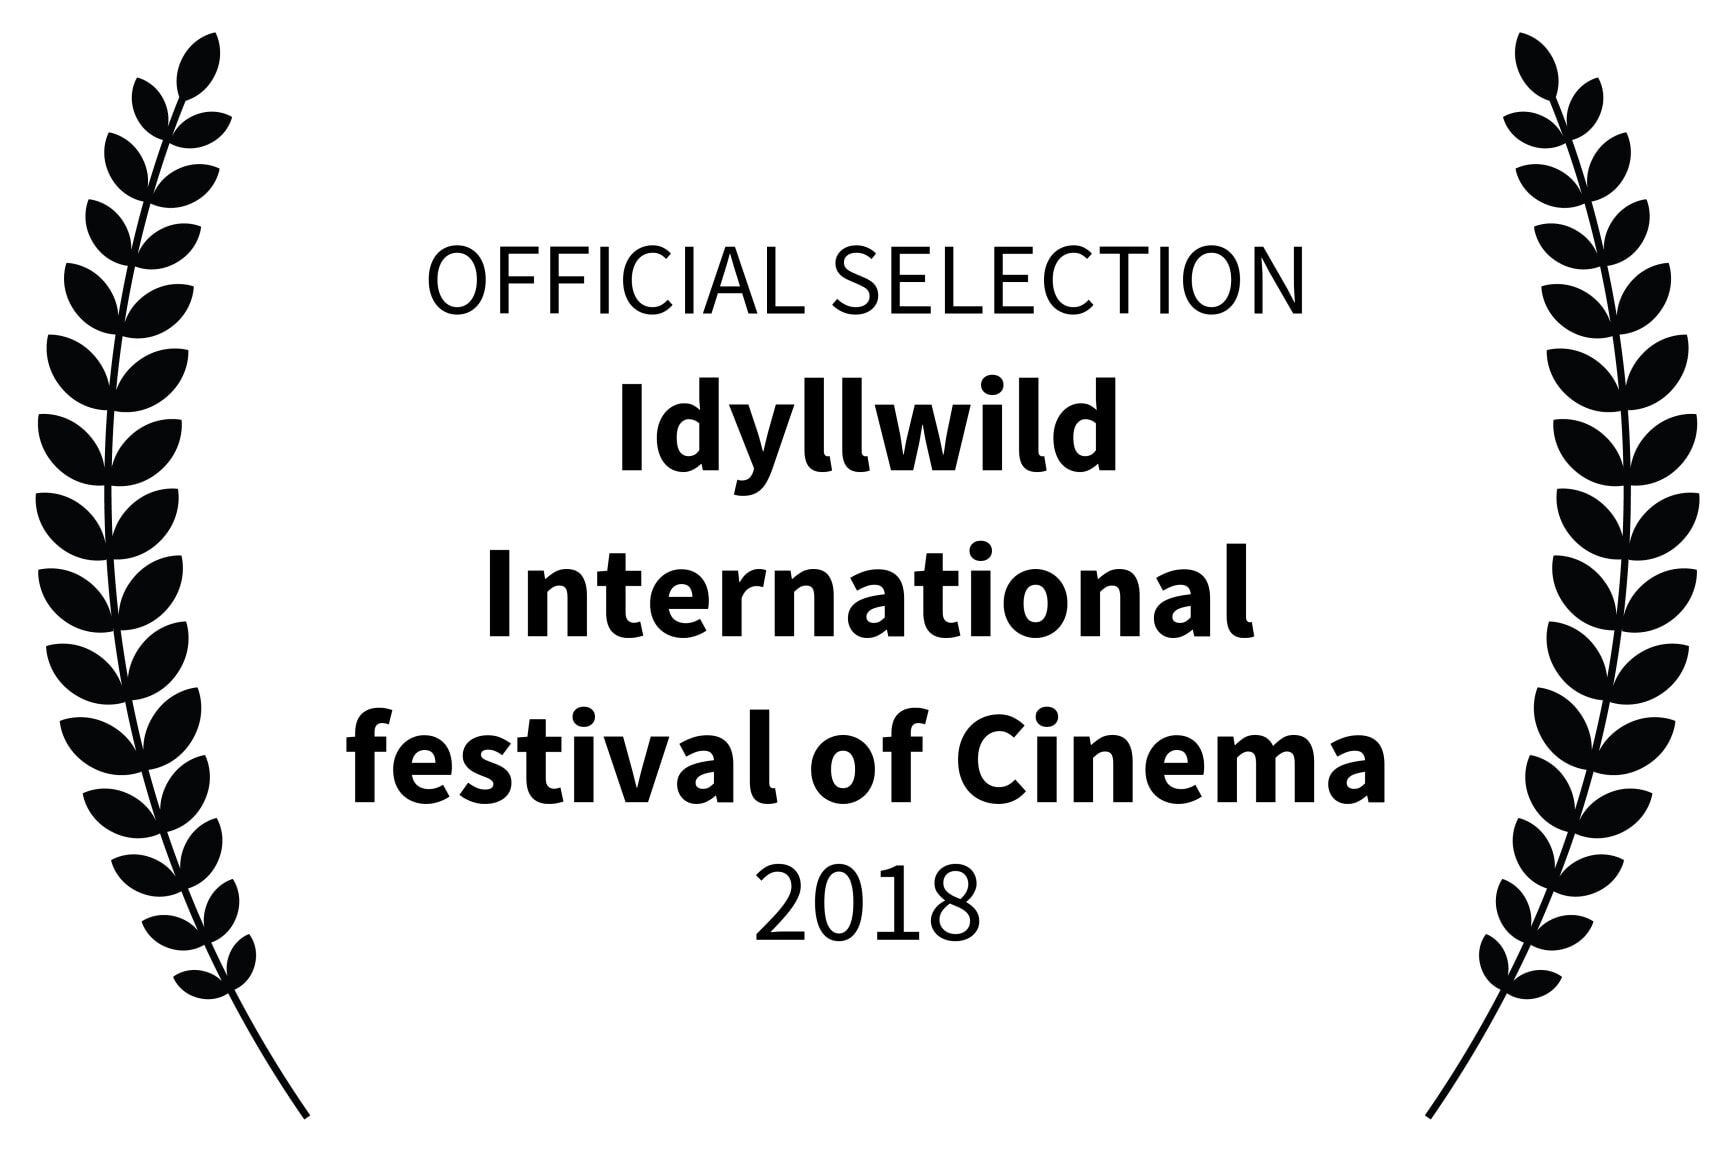 OFFICIAL SELECTION - Idyllwild International festival of Cinema - 2018